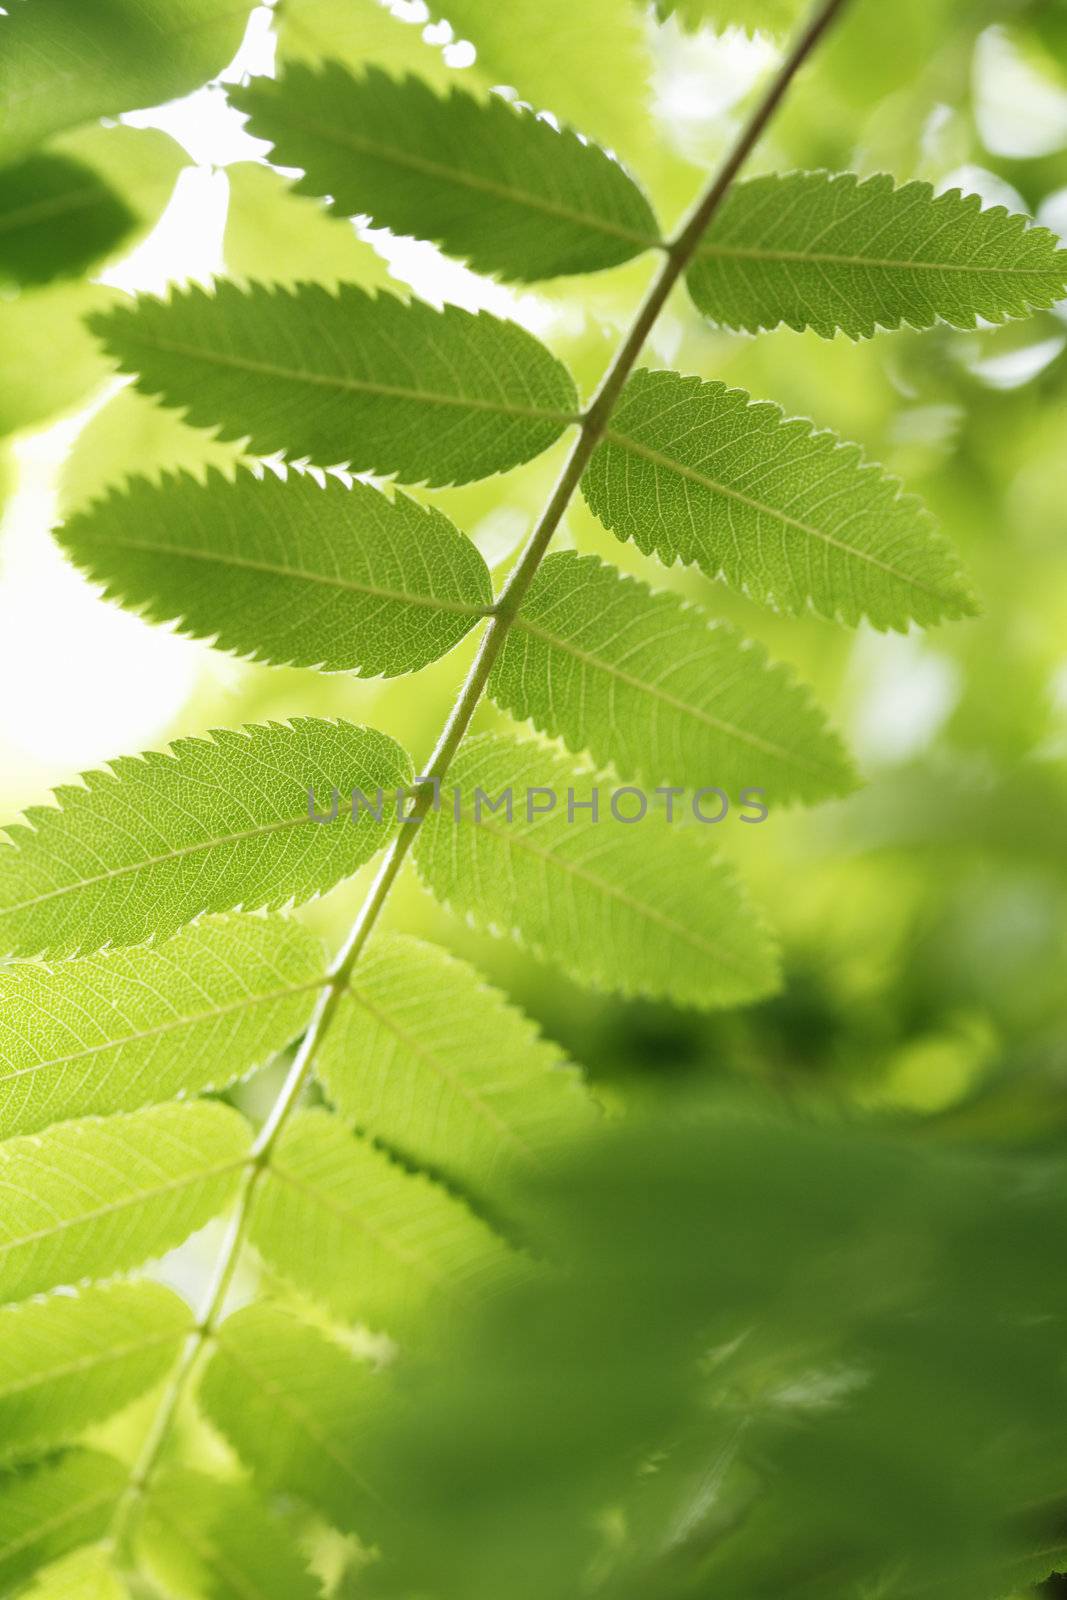 Rowan tree leaf in detail